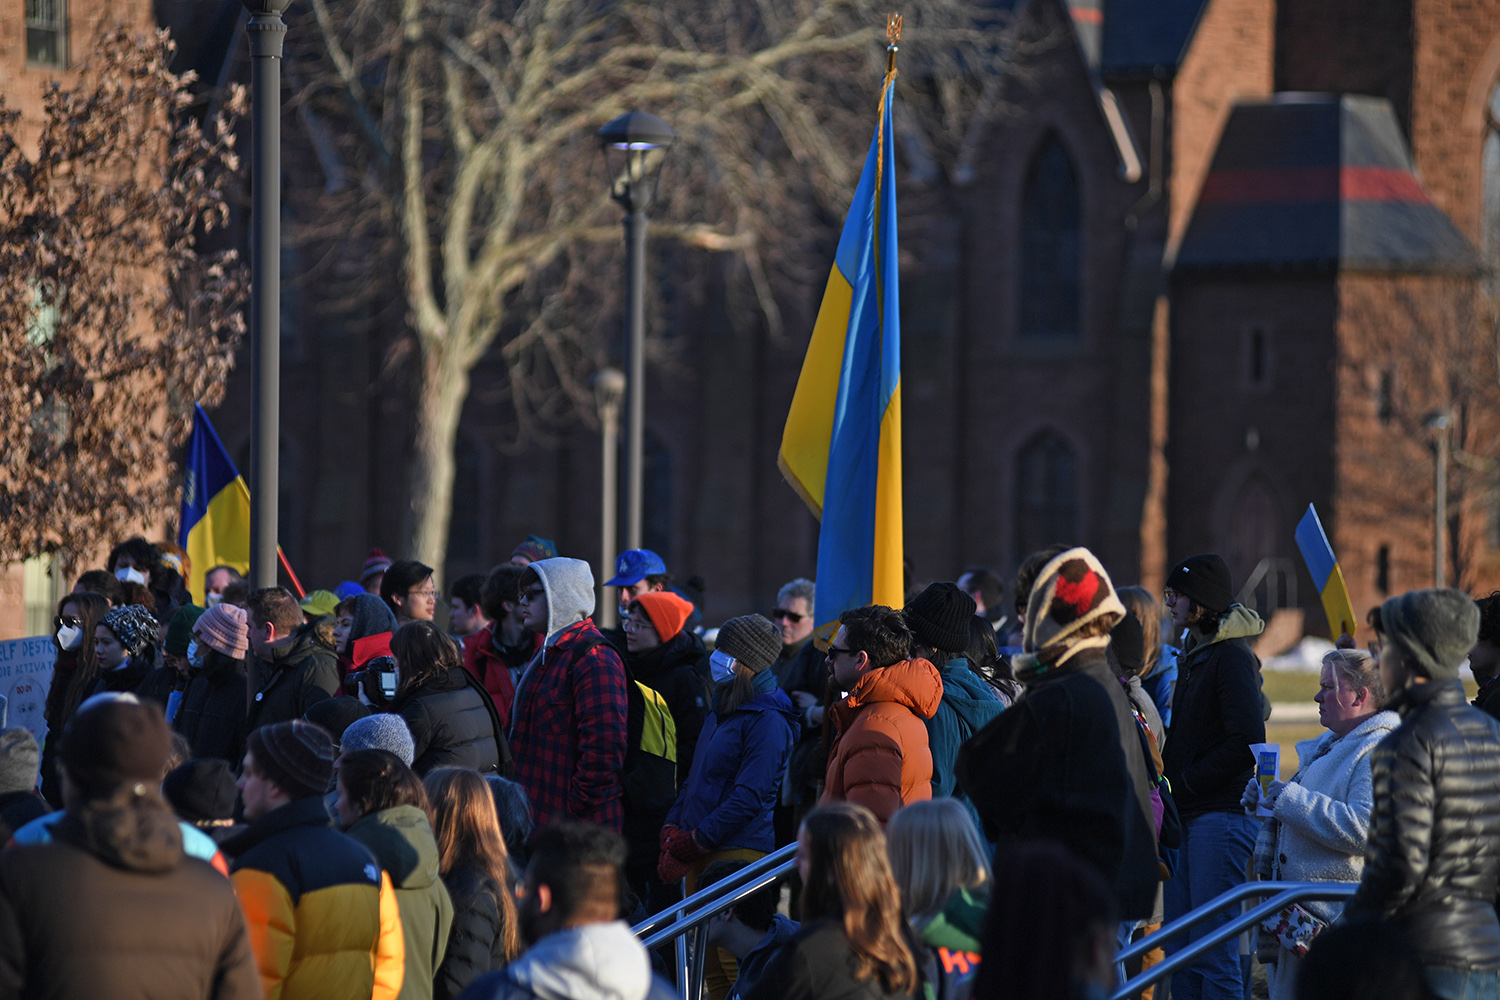 ukraine rally